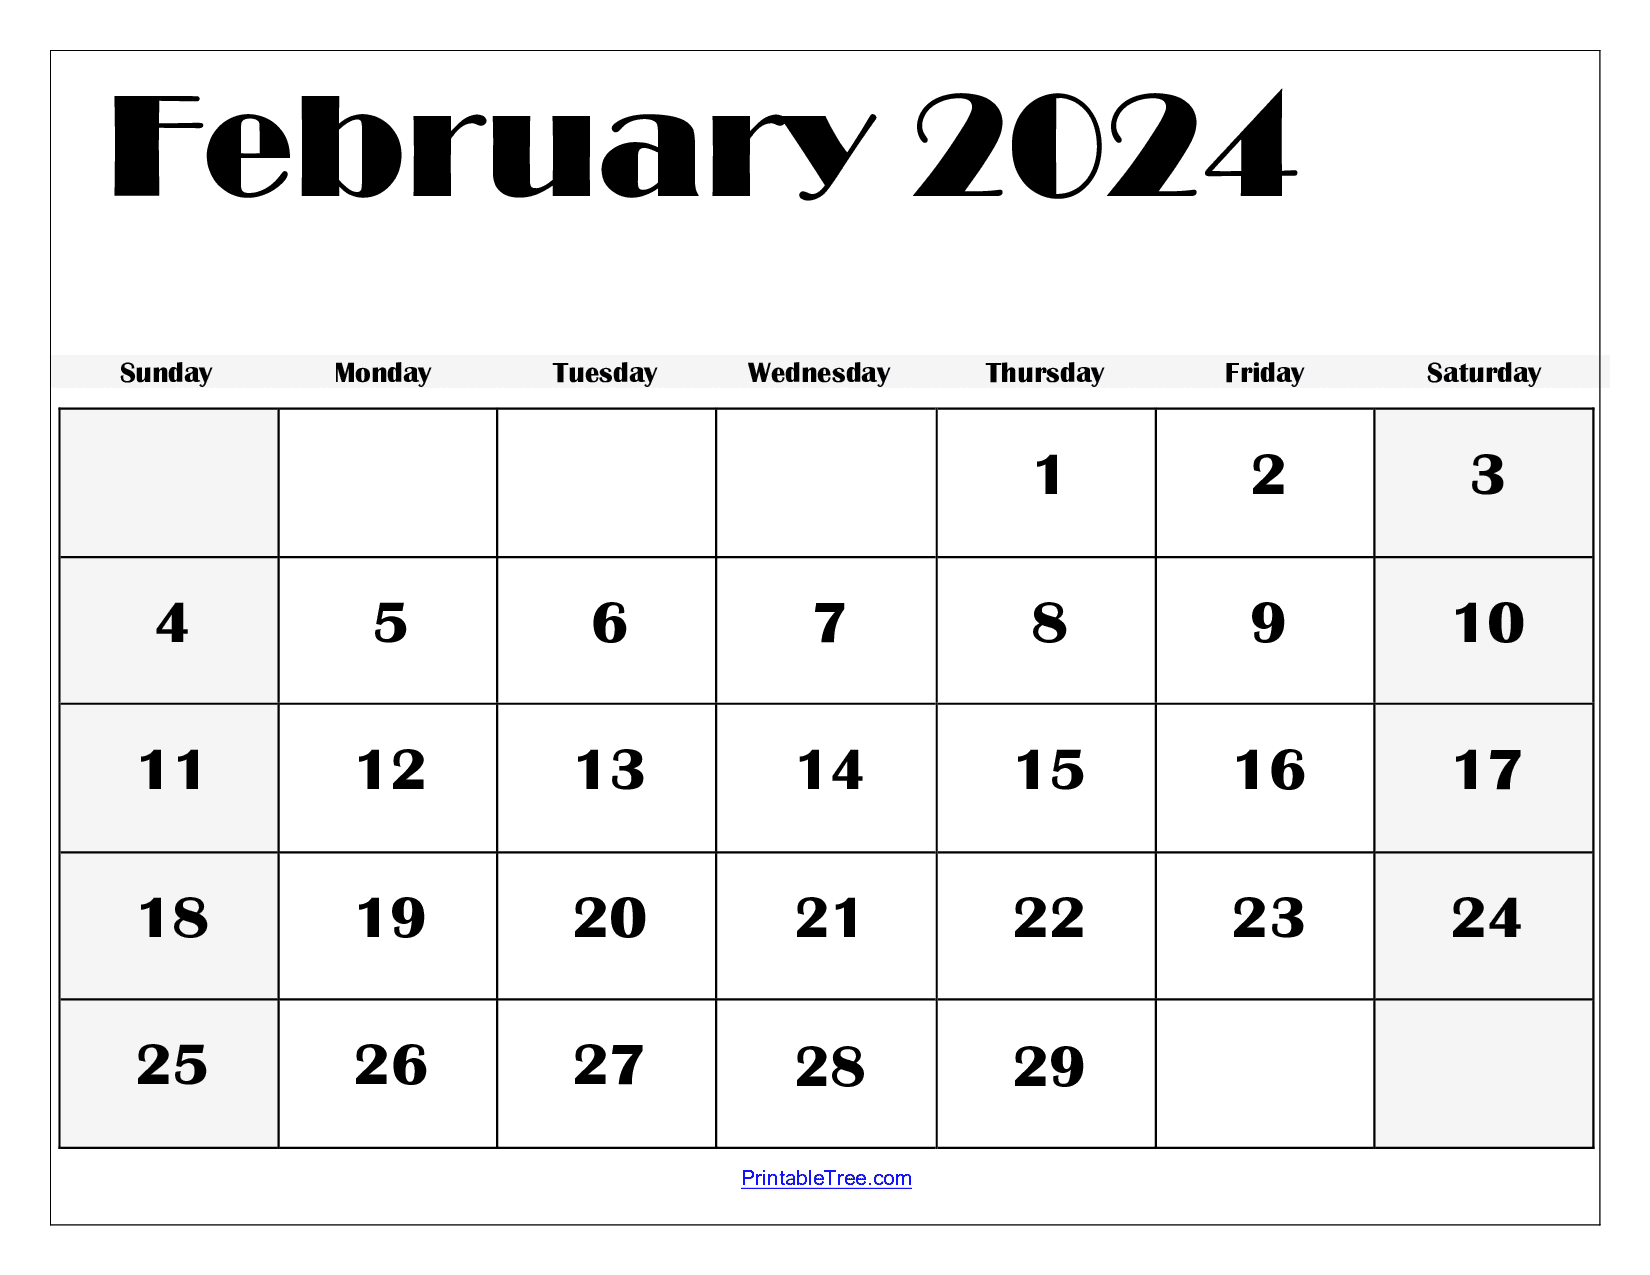 February 2024 Calendar Printable Pdf Template With Holidays for Printable Calendar February 2024 Free